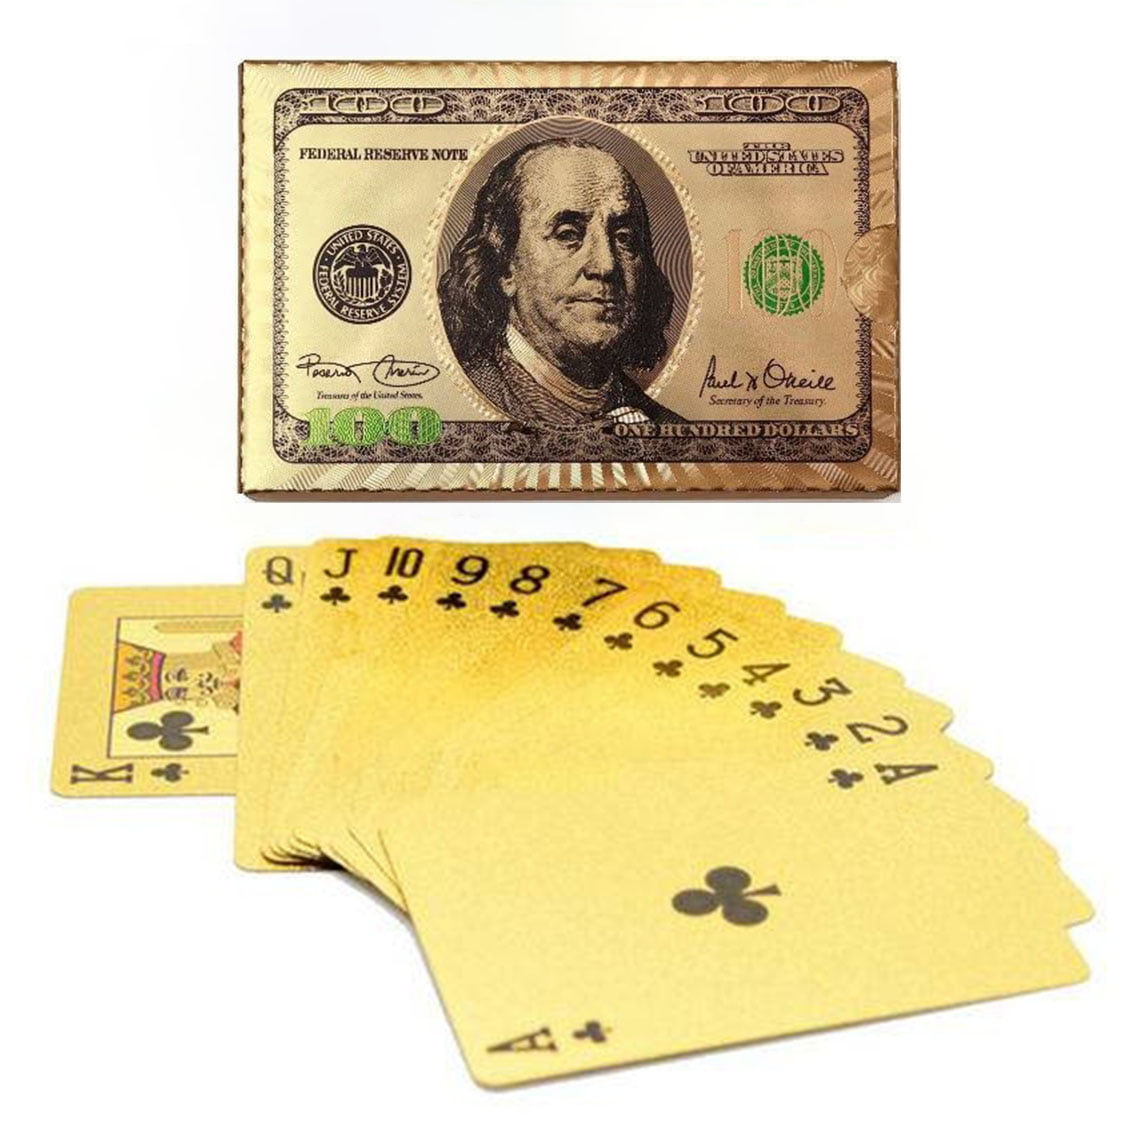 Lot is 8 decks  24K GOLD FOIL PLAYING CARDS NEWEST $100 BILL BENJAMIN  FRANKLIN 